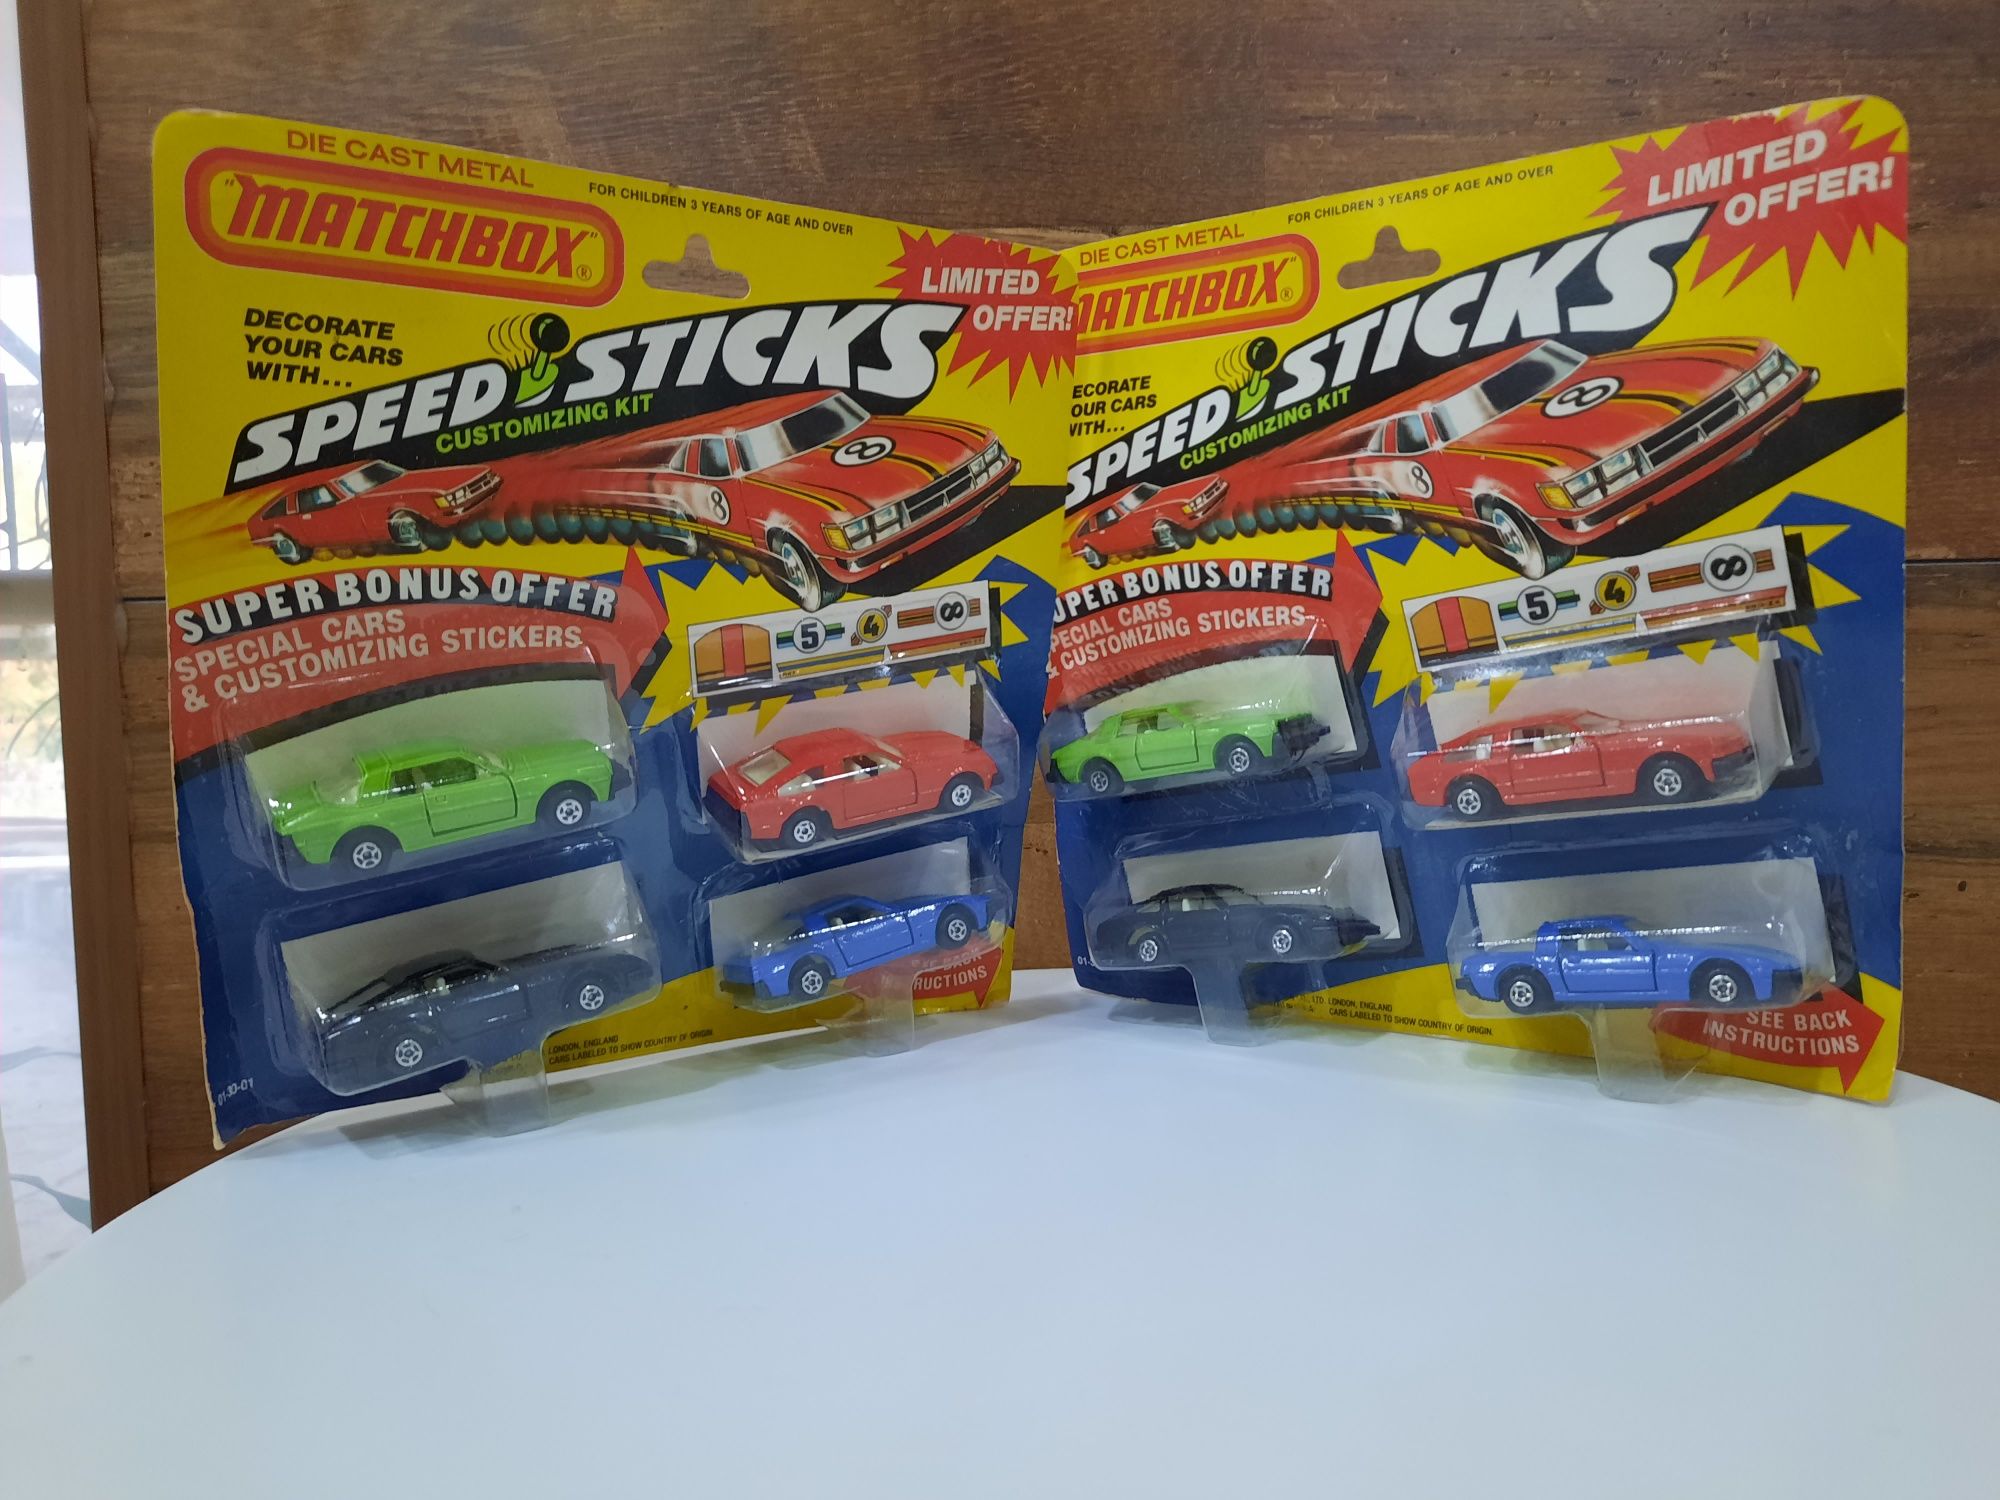 Speed sticks customizing kit 2001 година